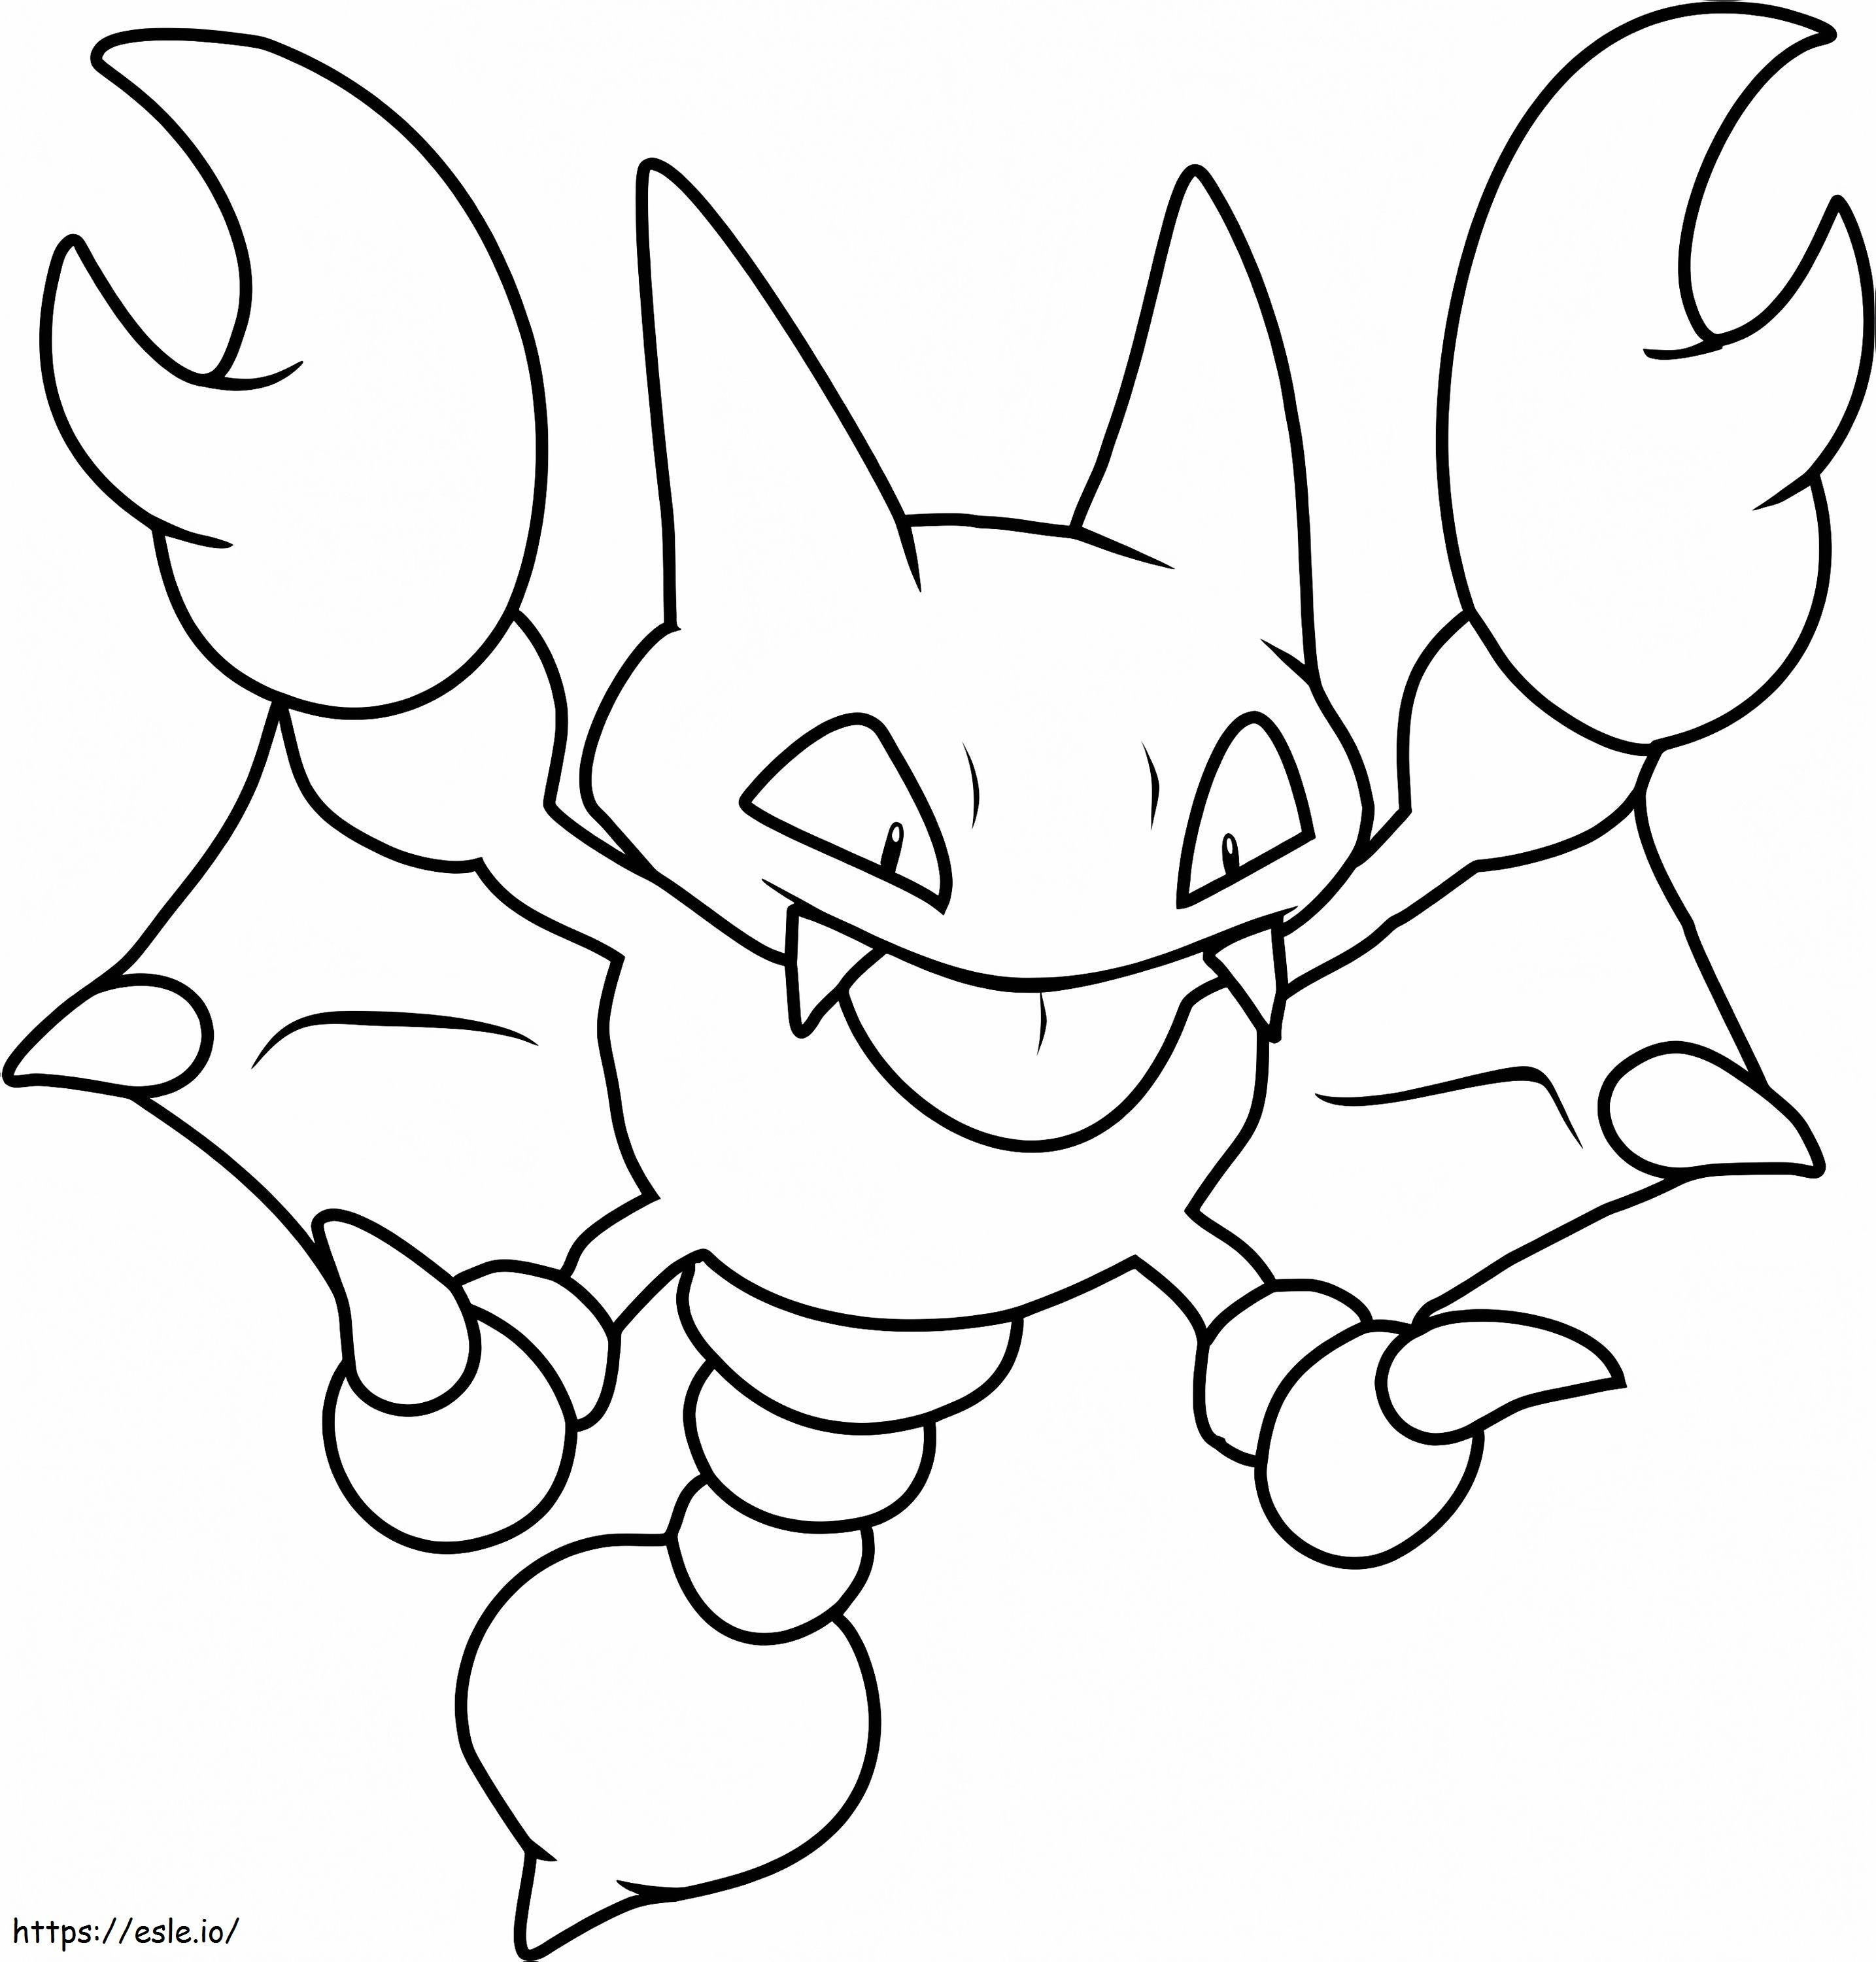 Gligar-Pokémon ausmalbilder